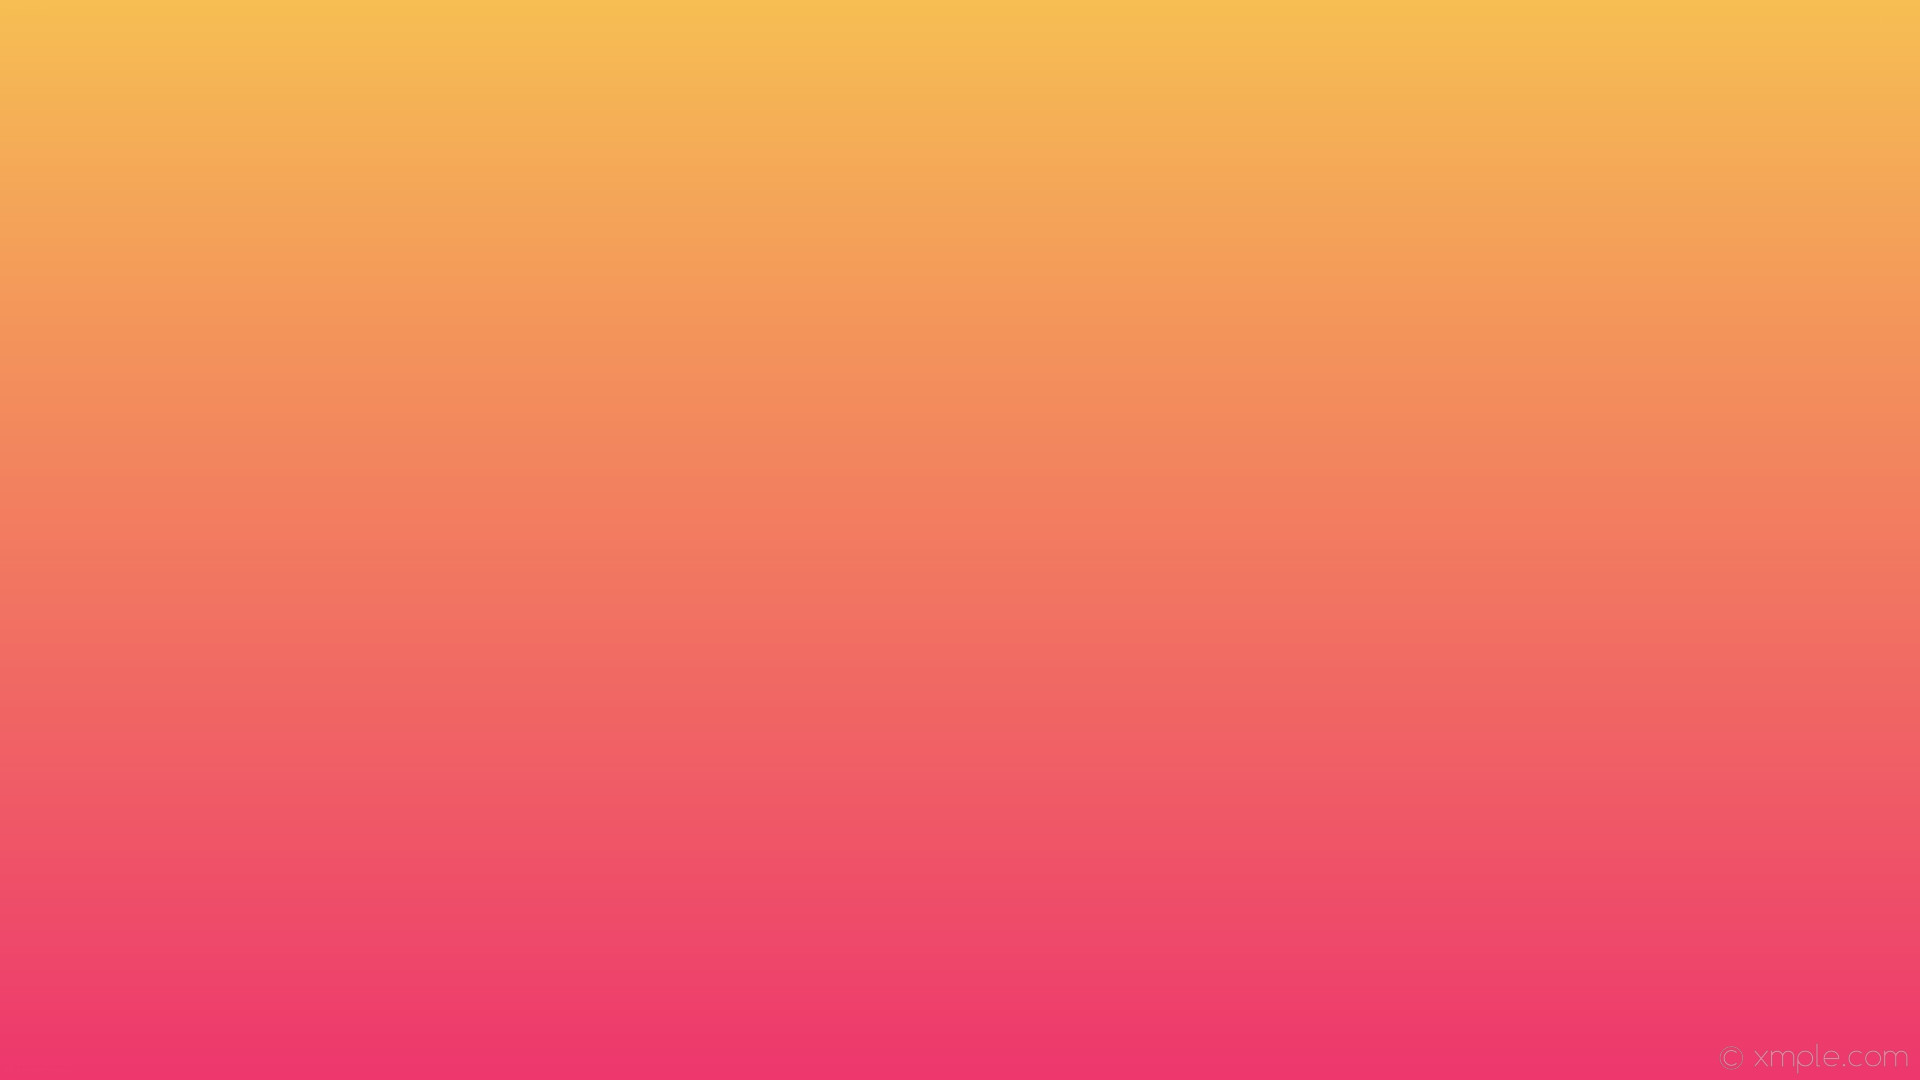 1920x1080 wallpaper orange pink gradient linear #f6be53 #ed376d 90Â°